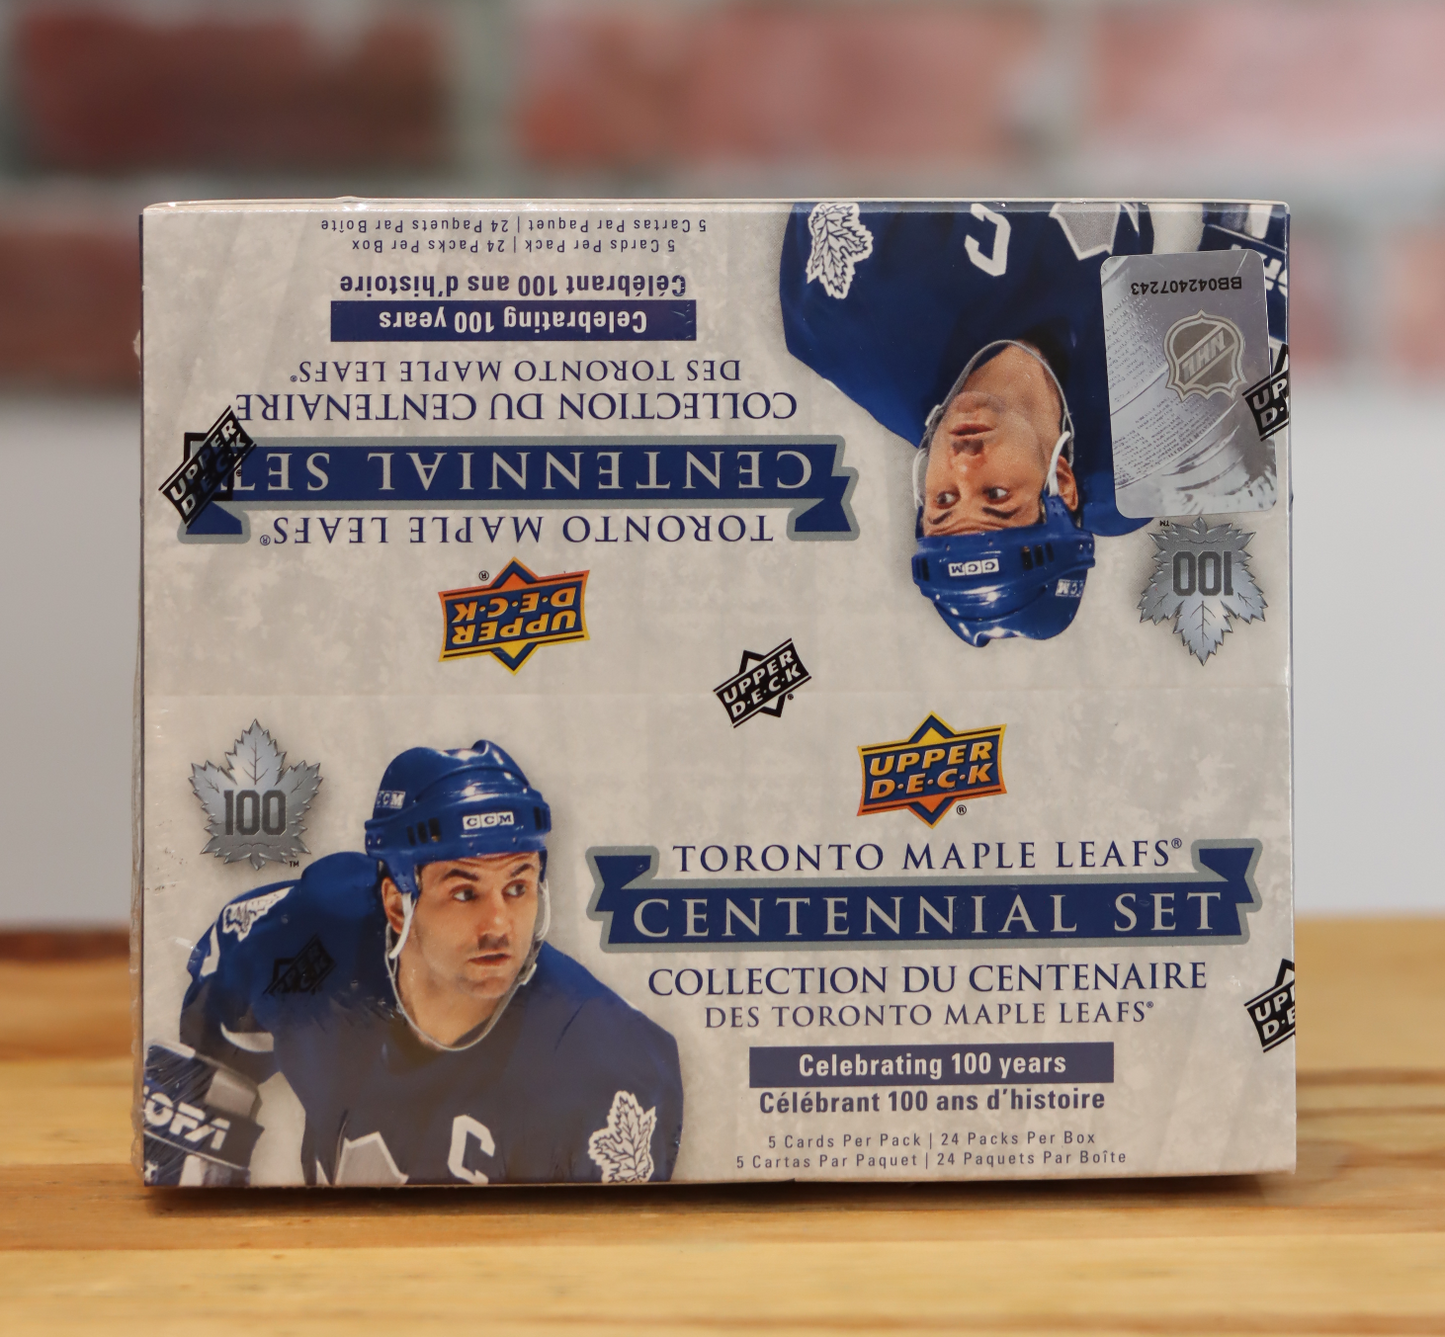 2017 Upper Deck Toronto Maple Leafs Centennial Hockey Card Retail Box (24 Packs)